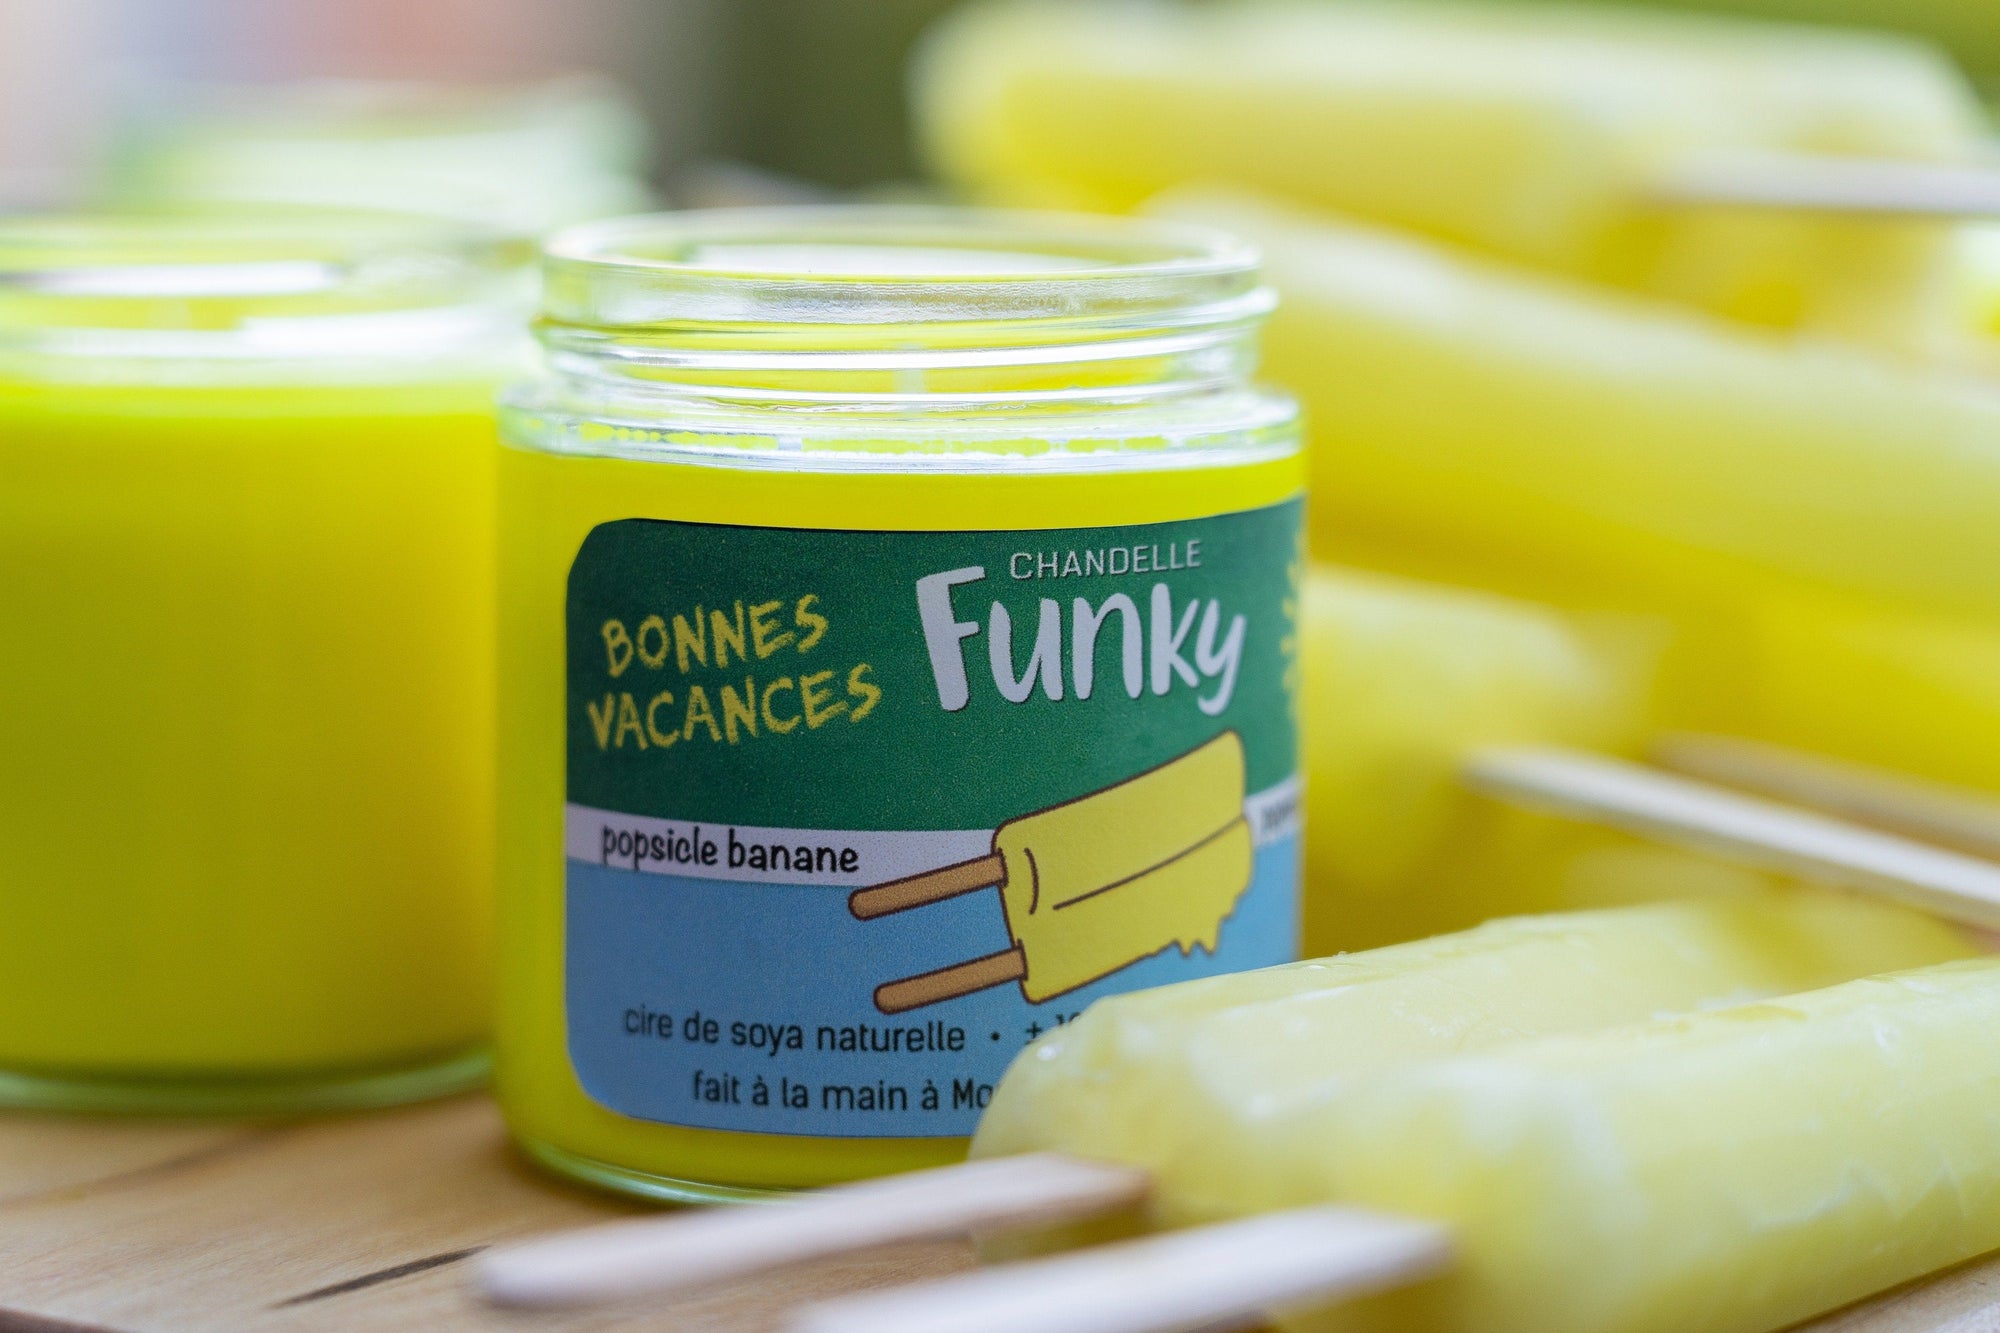 Chandelle Popsicle banane - Funky - Funky & Co.